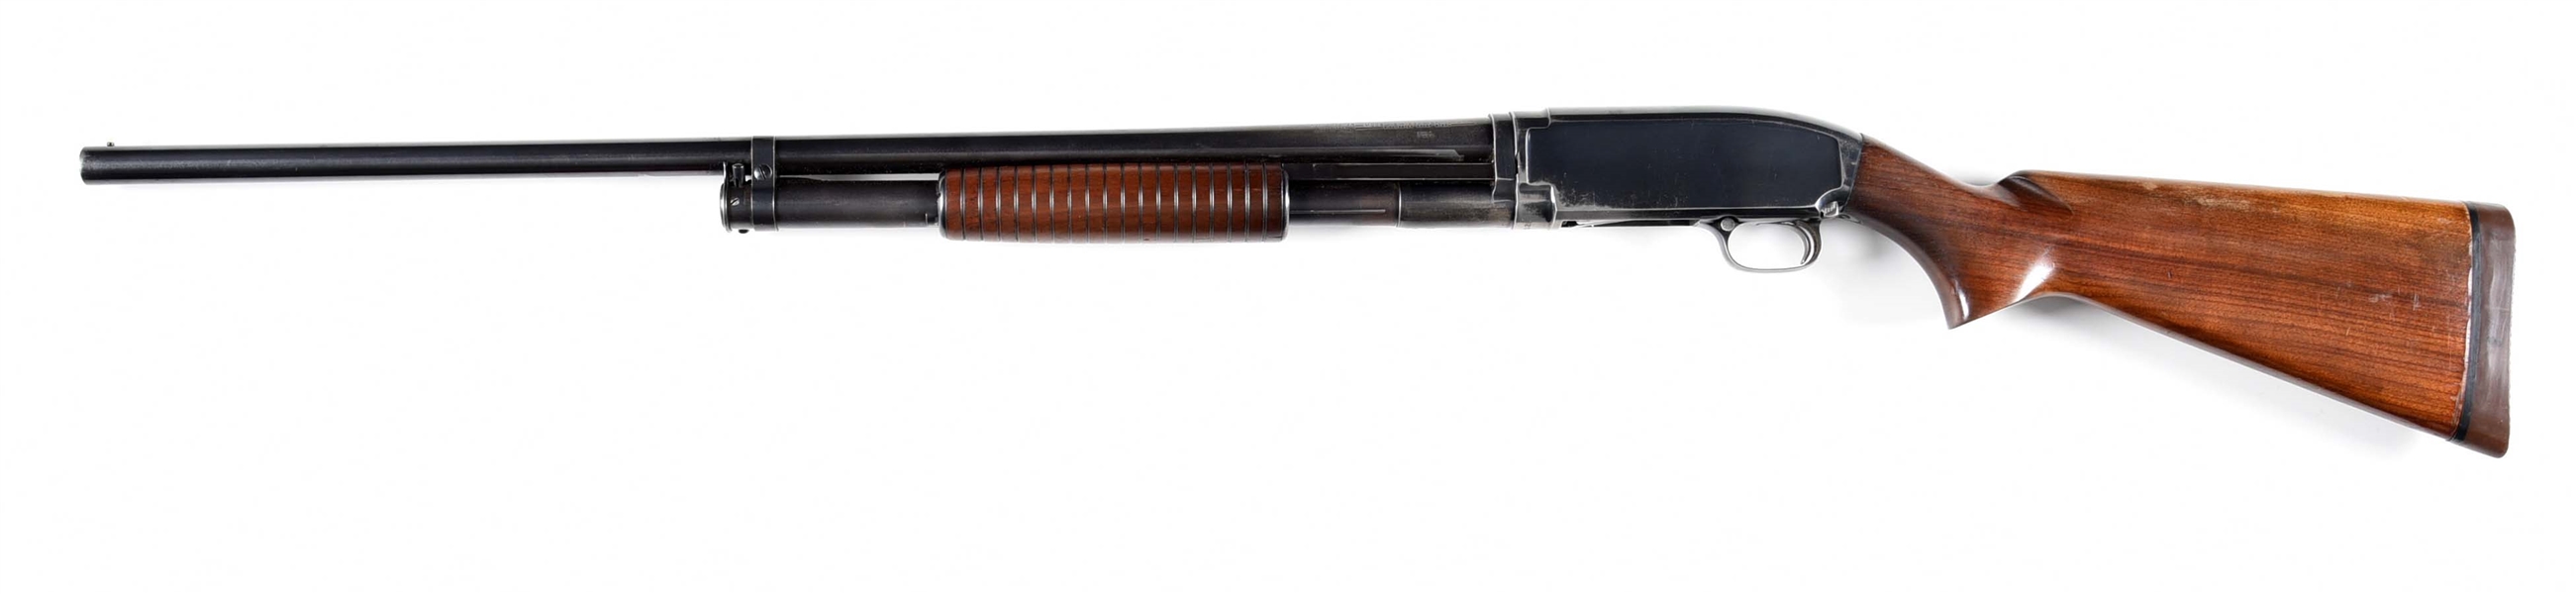 remington model 12 serial number 163xxx